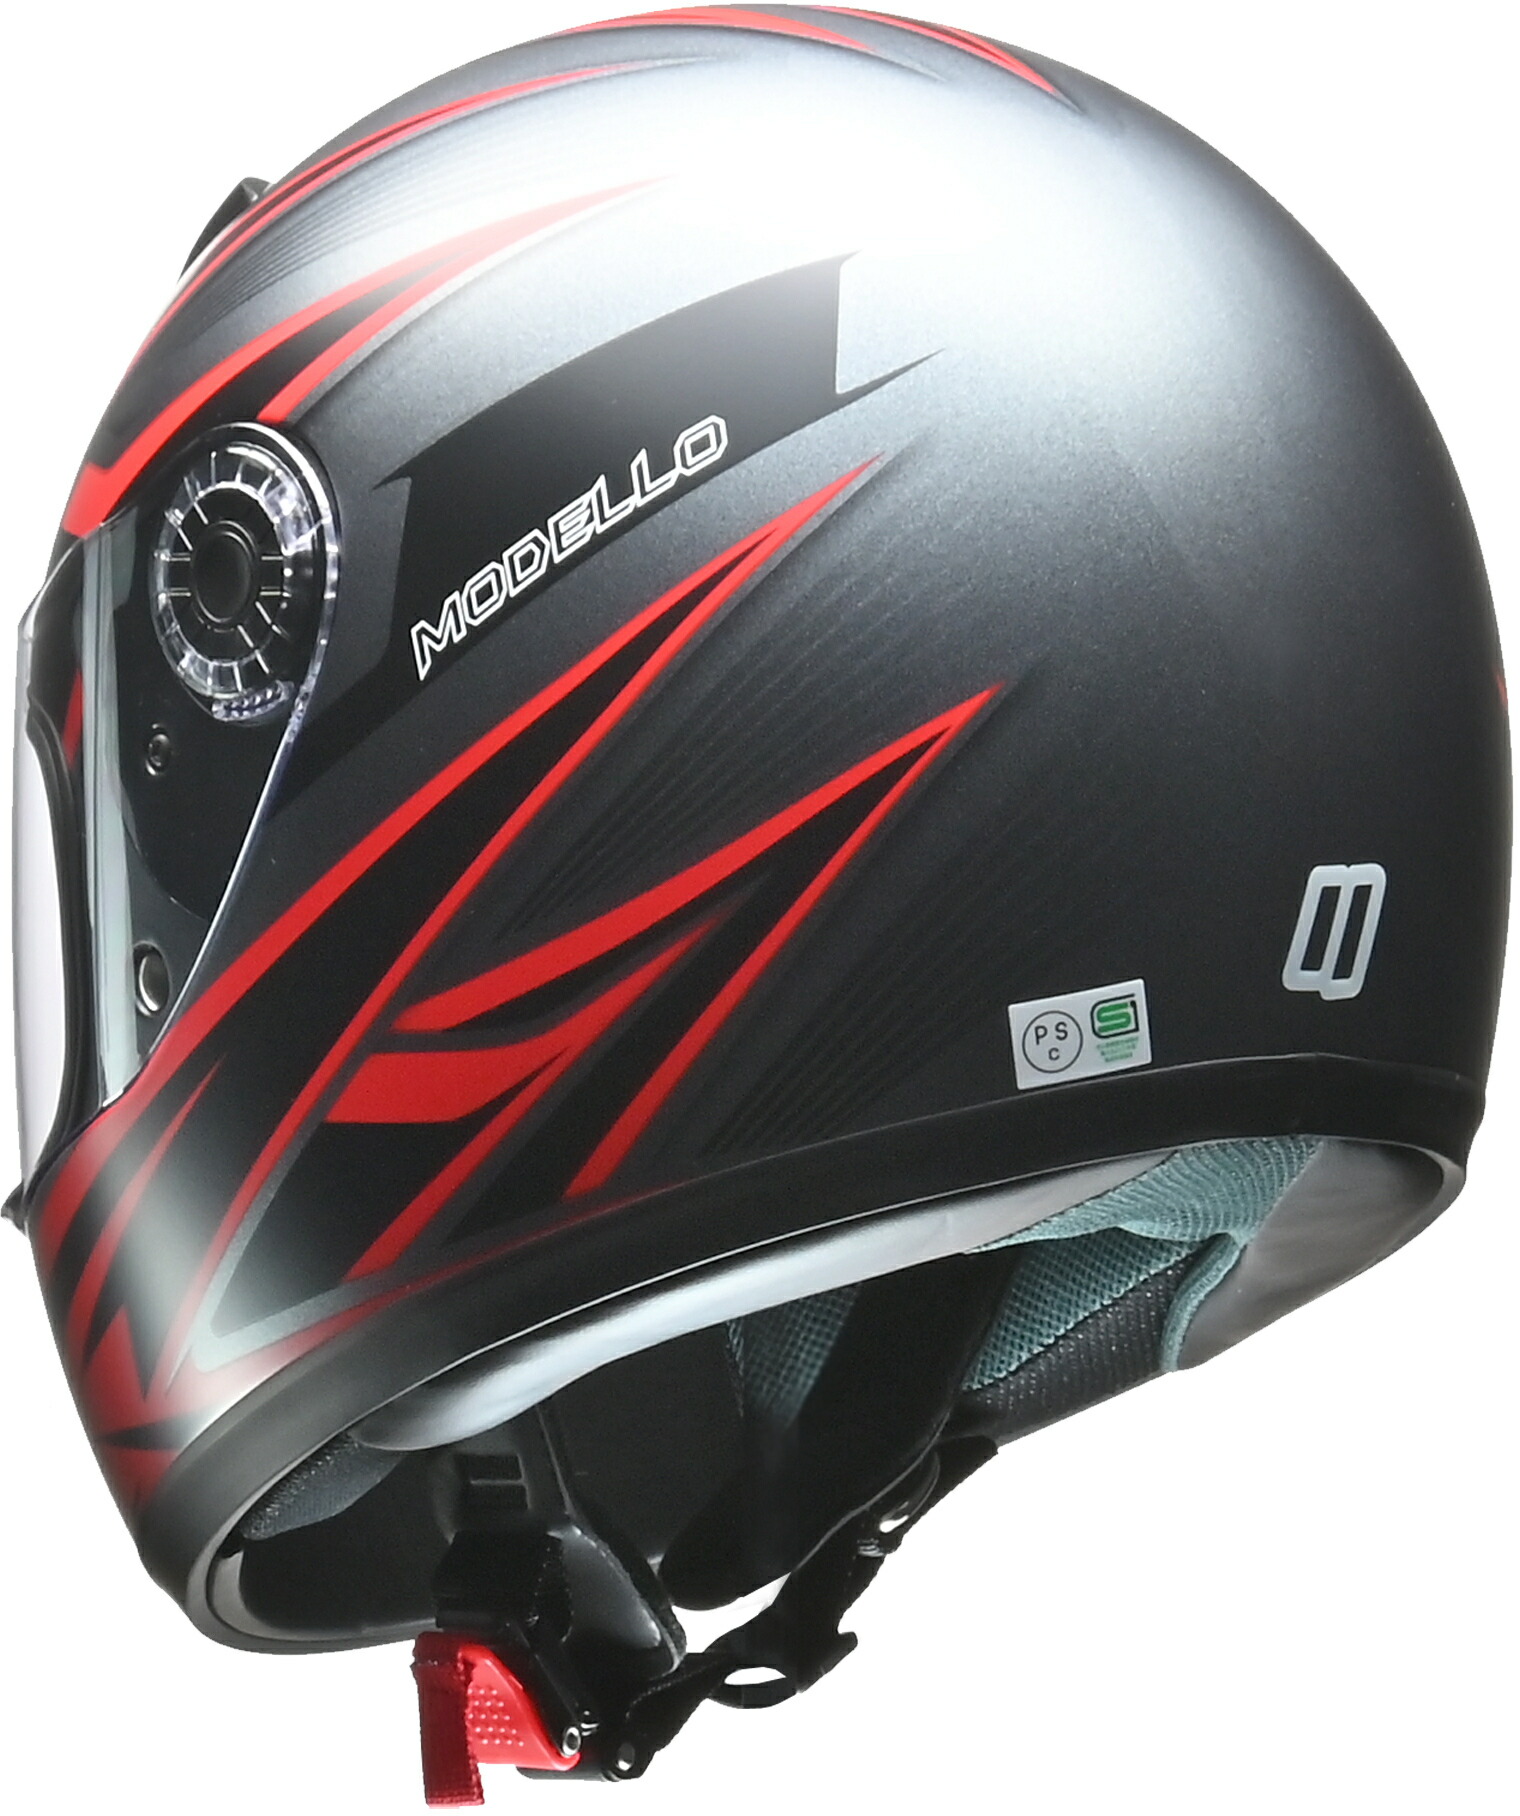  Lead промышленность (LEAD) мотоцикл шлем full-face MODELLO (mote-ro) коврик gun металлик свободный размер (57-60cm не достиг )